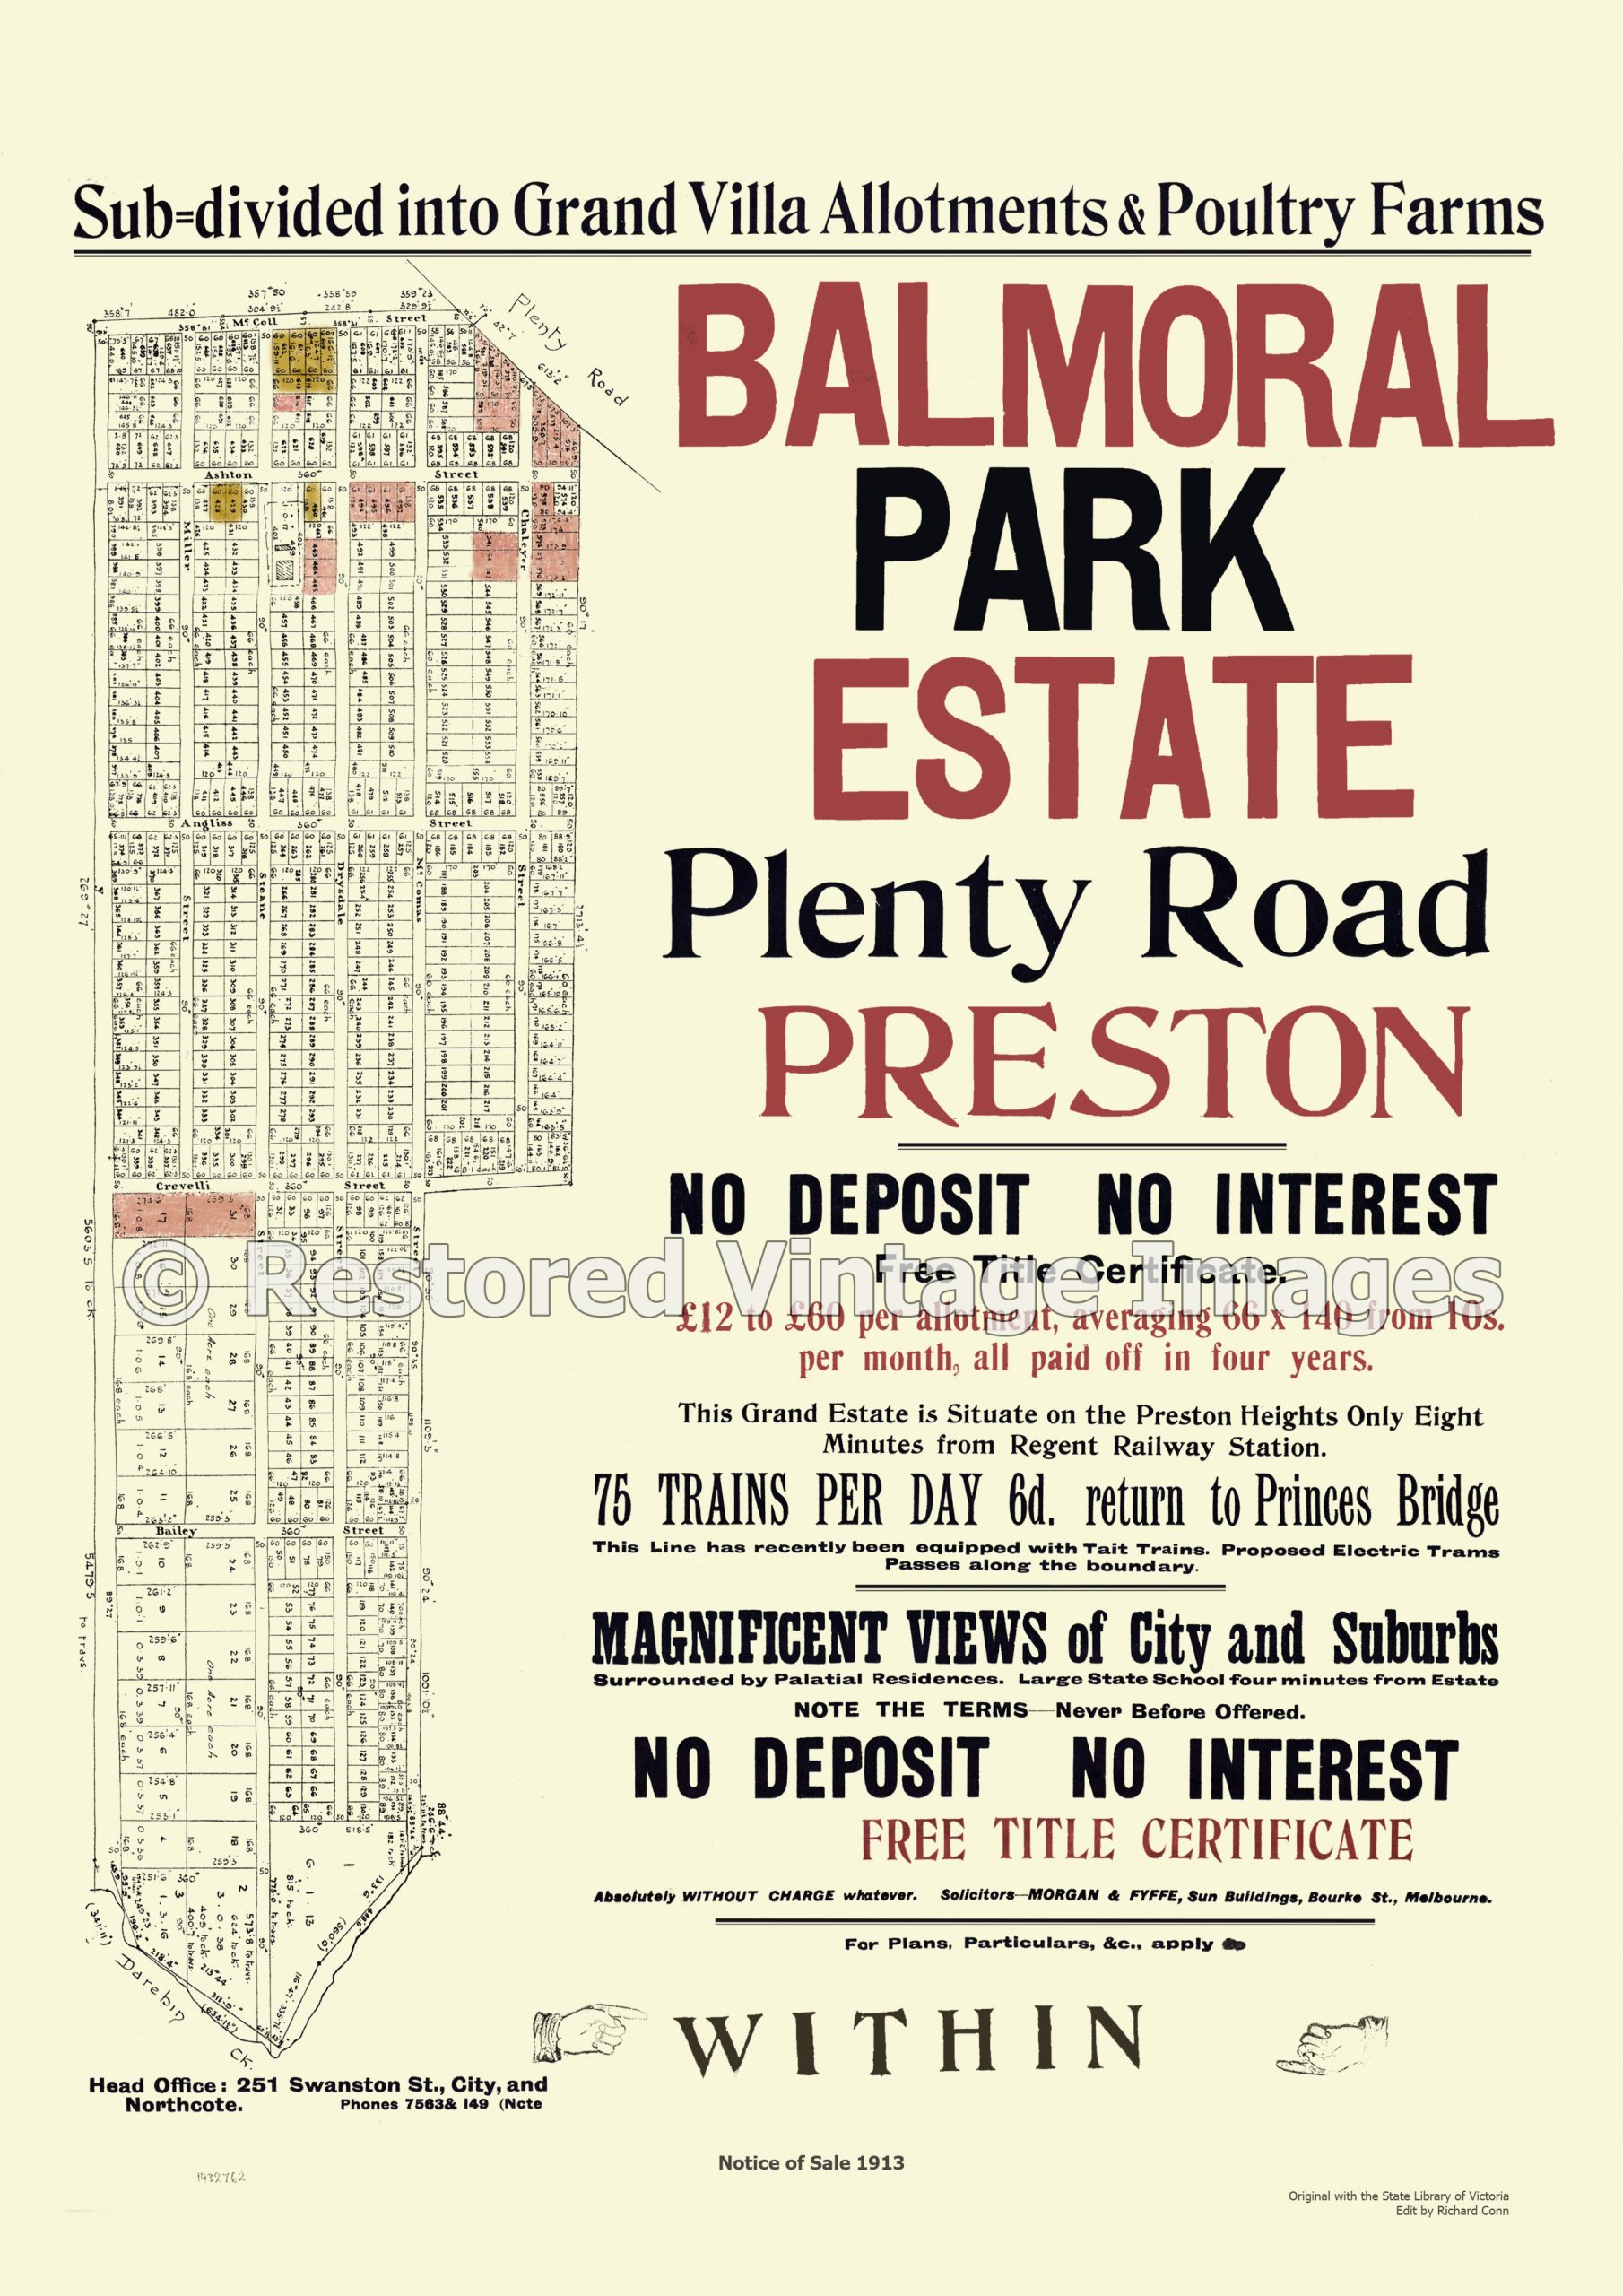 Balmoral Park Estate Plenty Road Preston 1913 – Reservoir